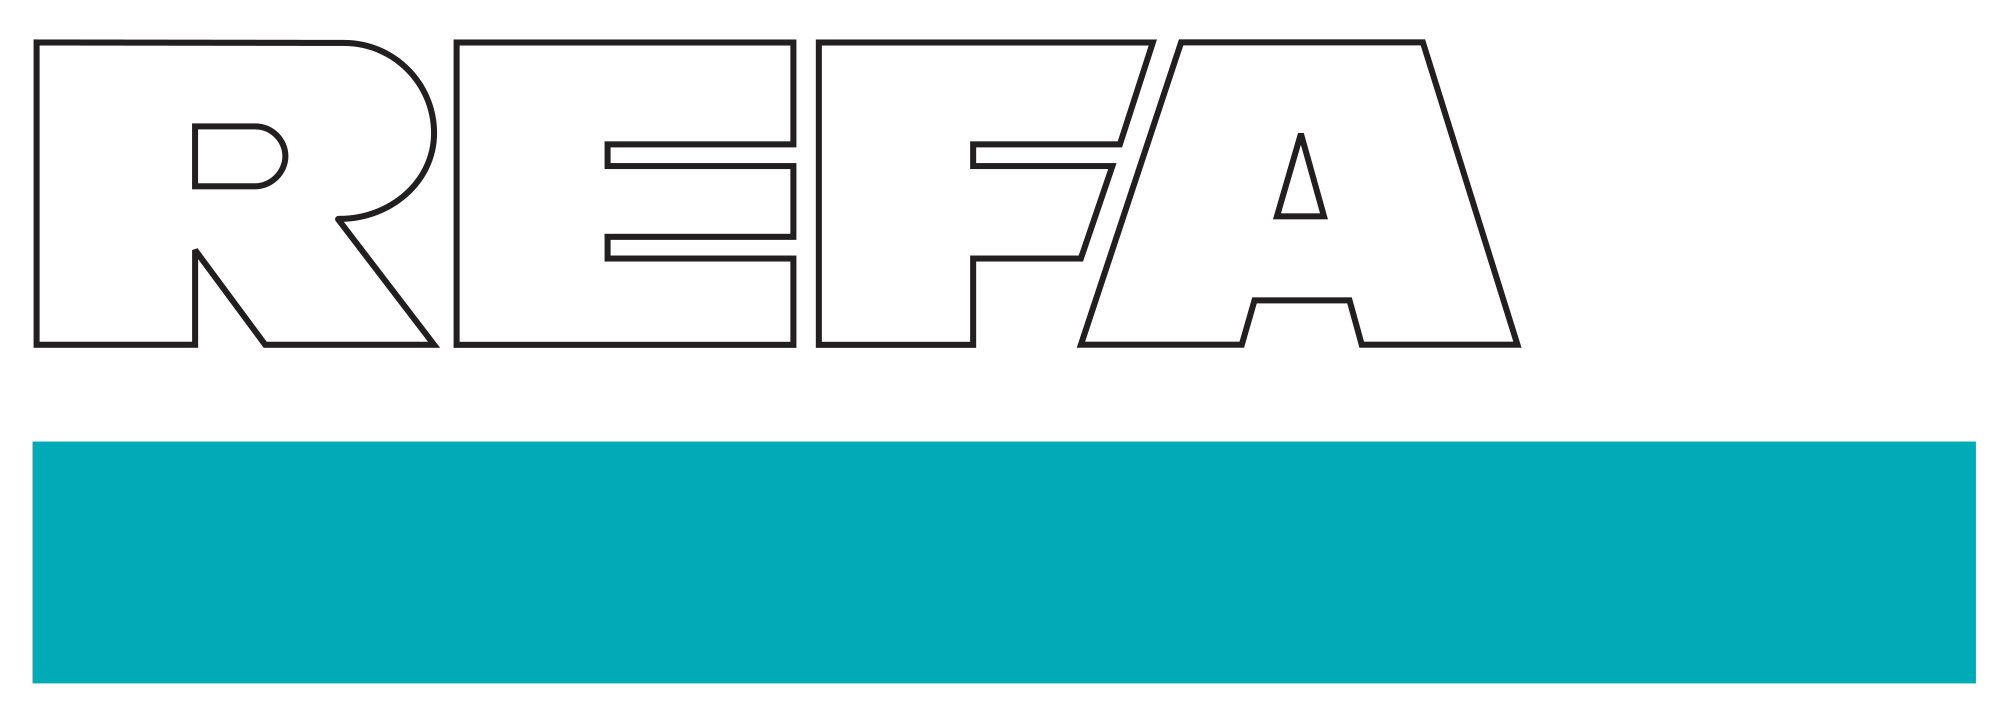 Refa logo svg